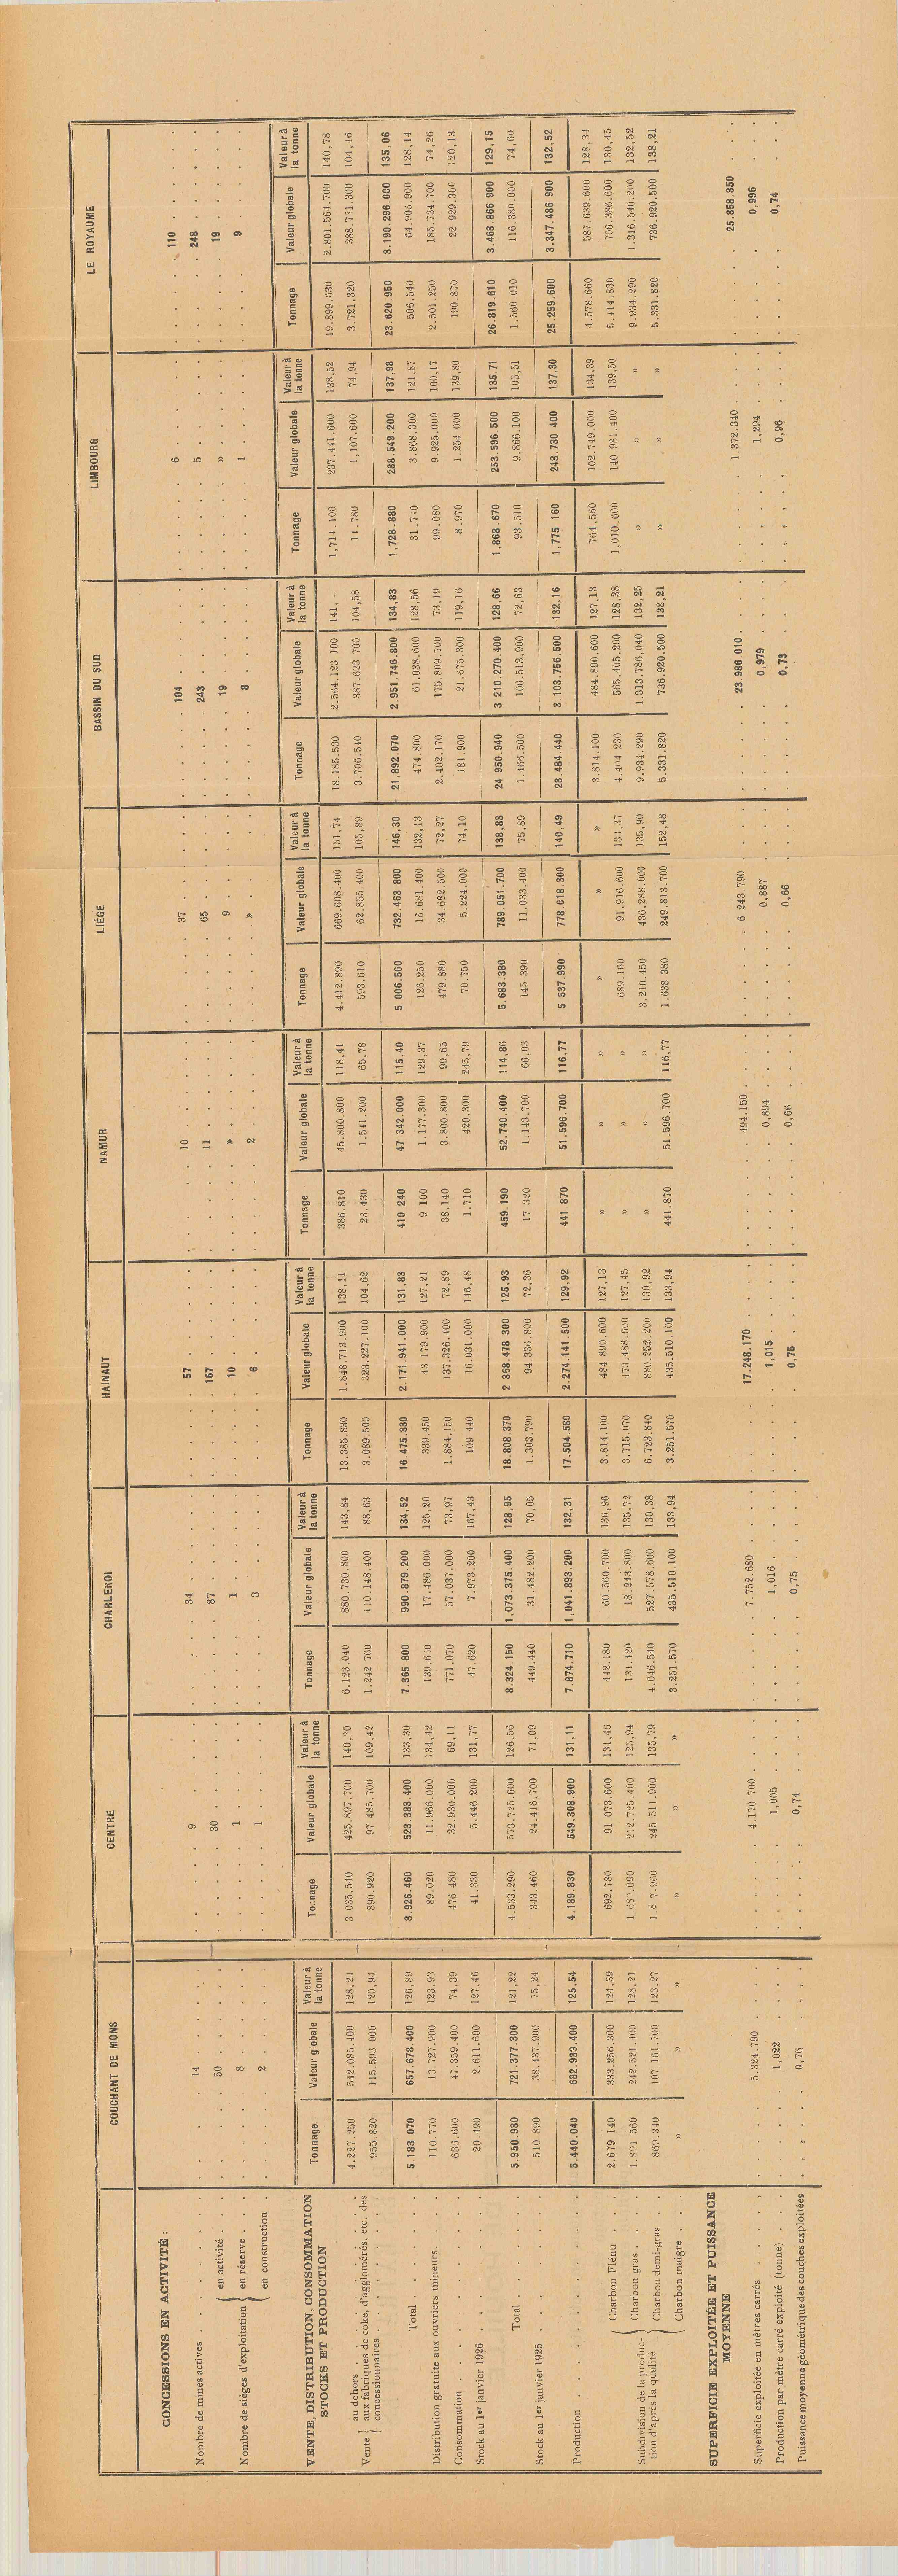 1927 1000 1 tab.jpg